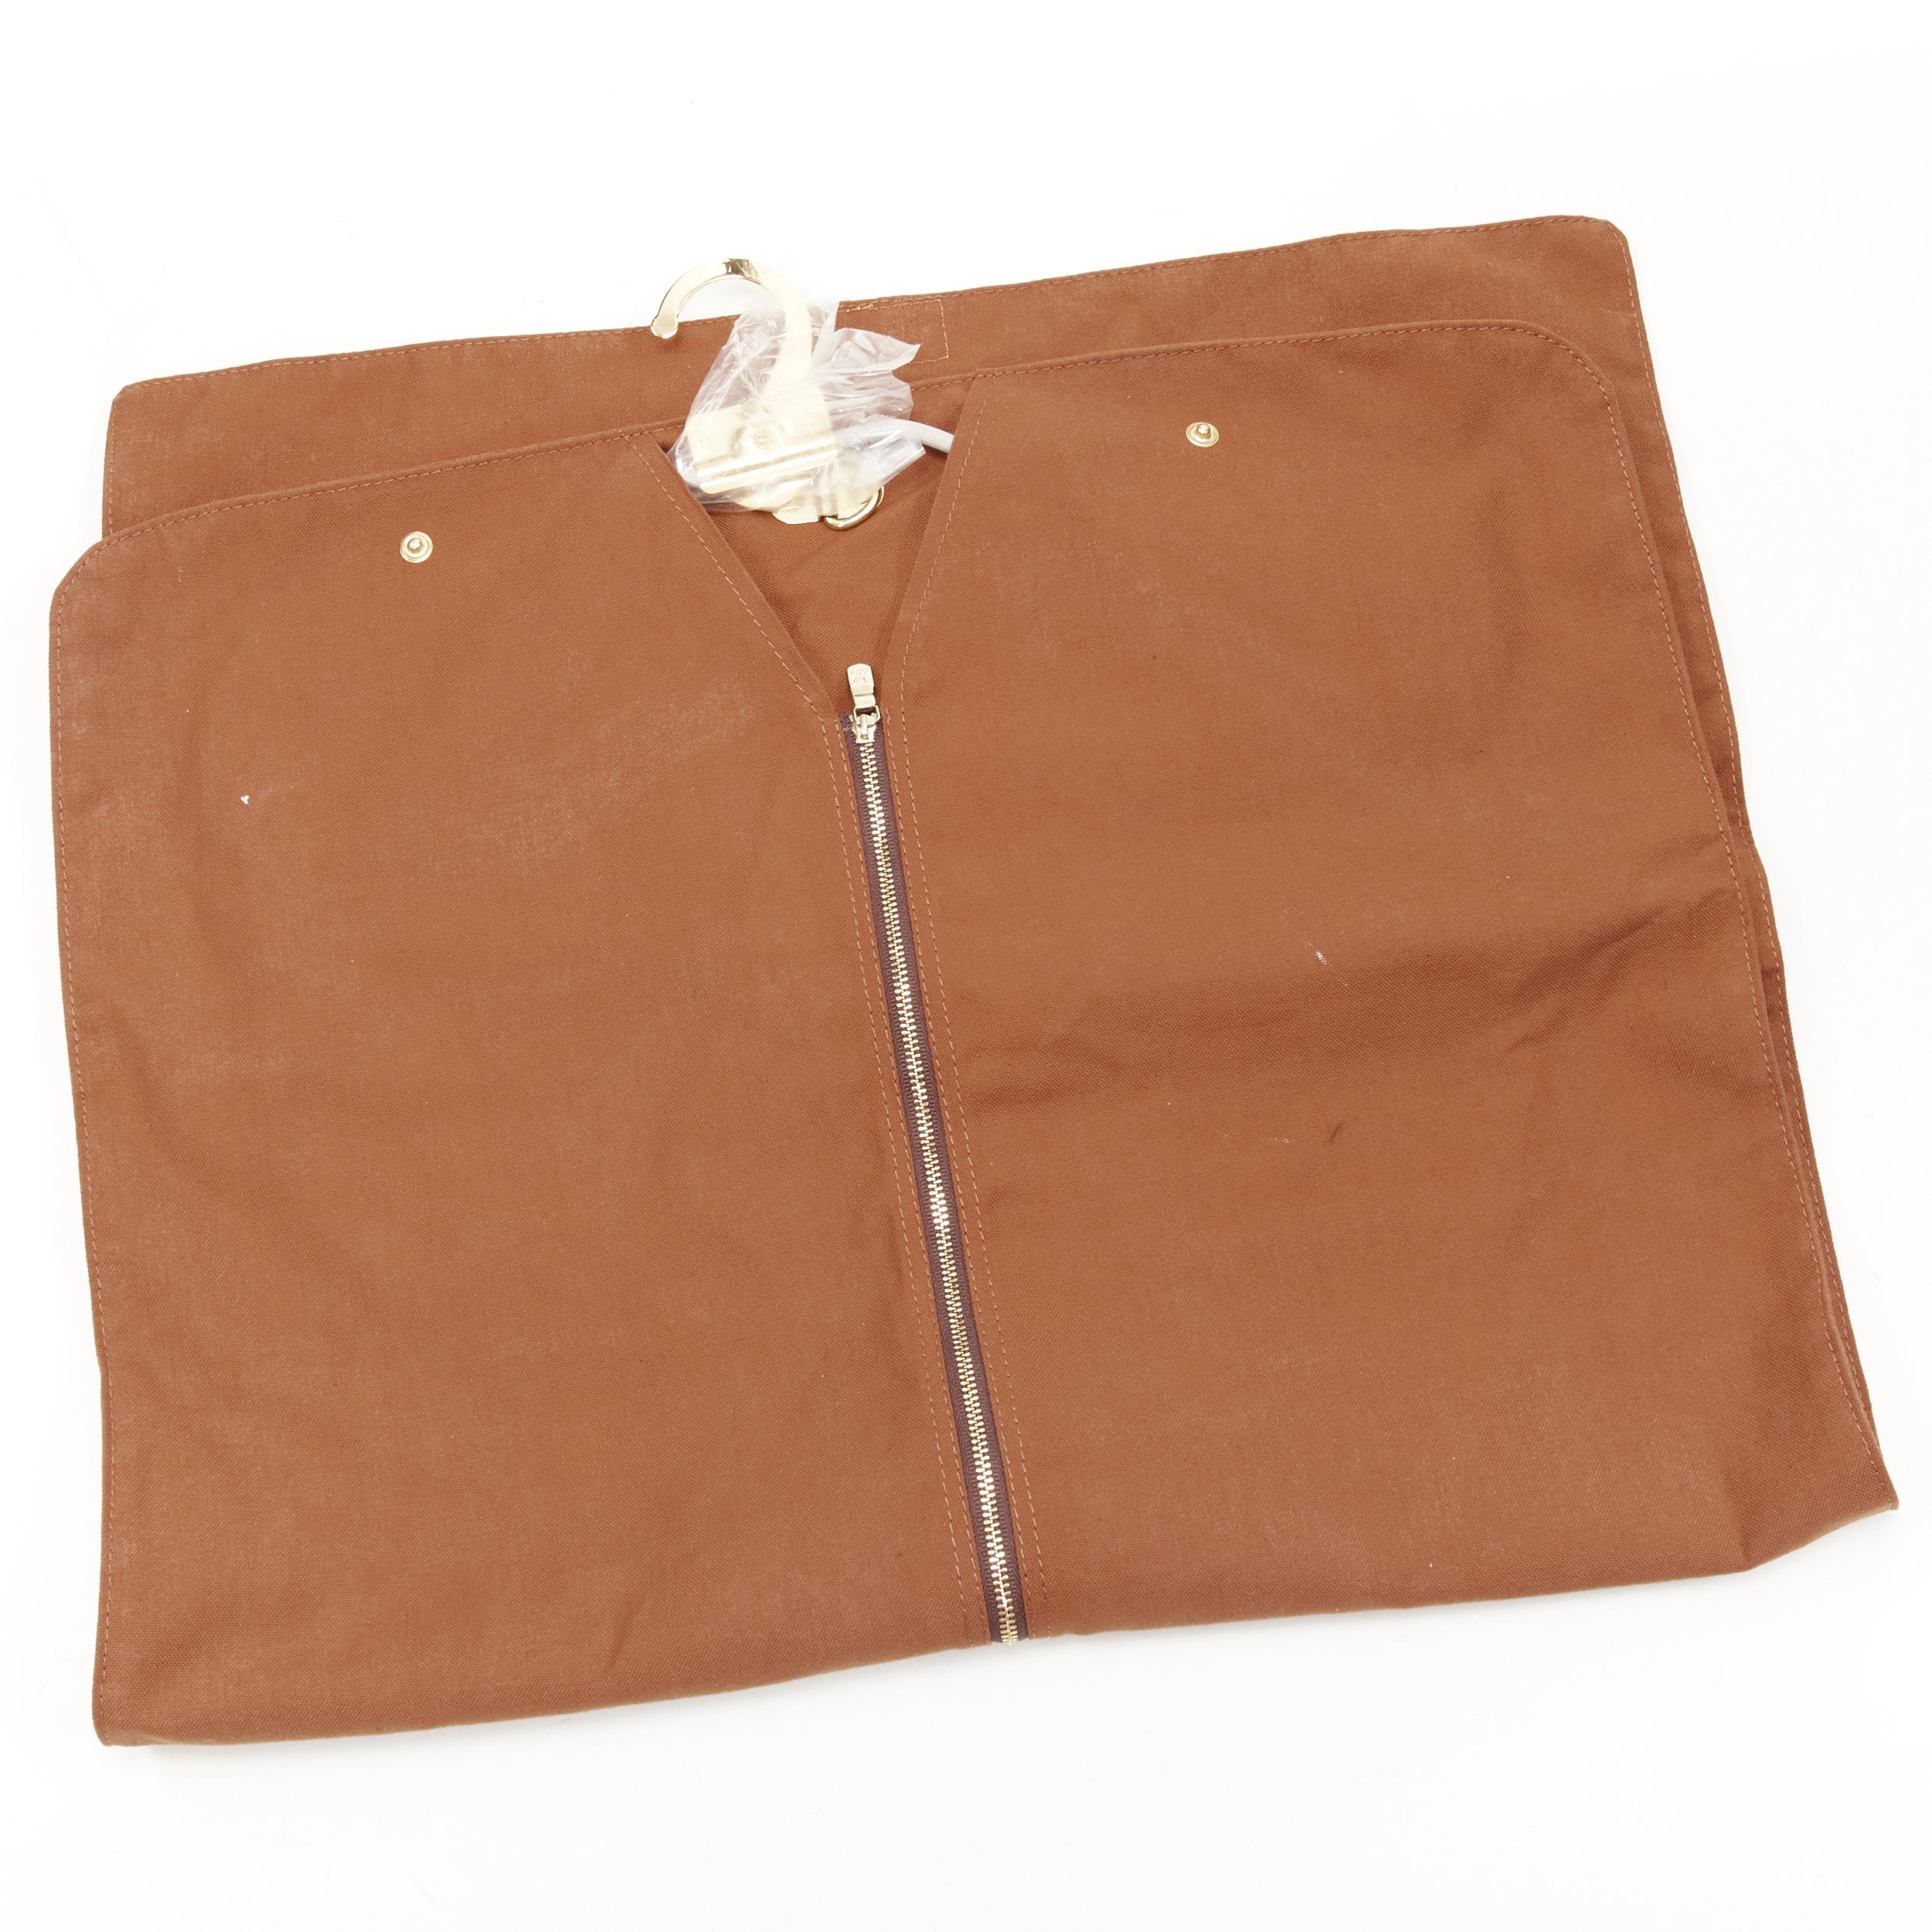 LOUIS VUITTON Sirius 70 brown LV monogram canvas large travel bag For Sale 10